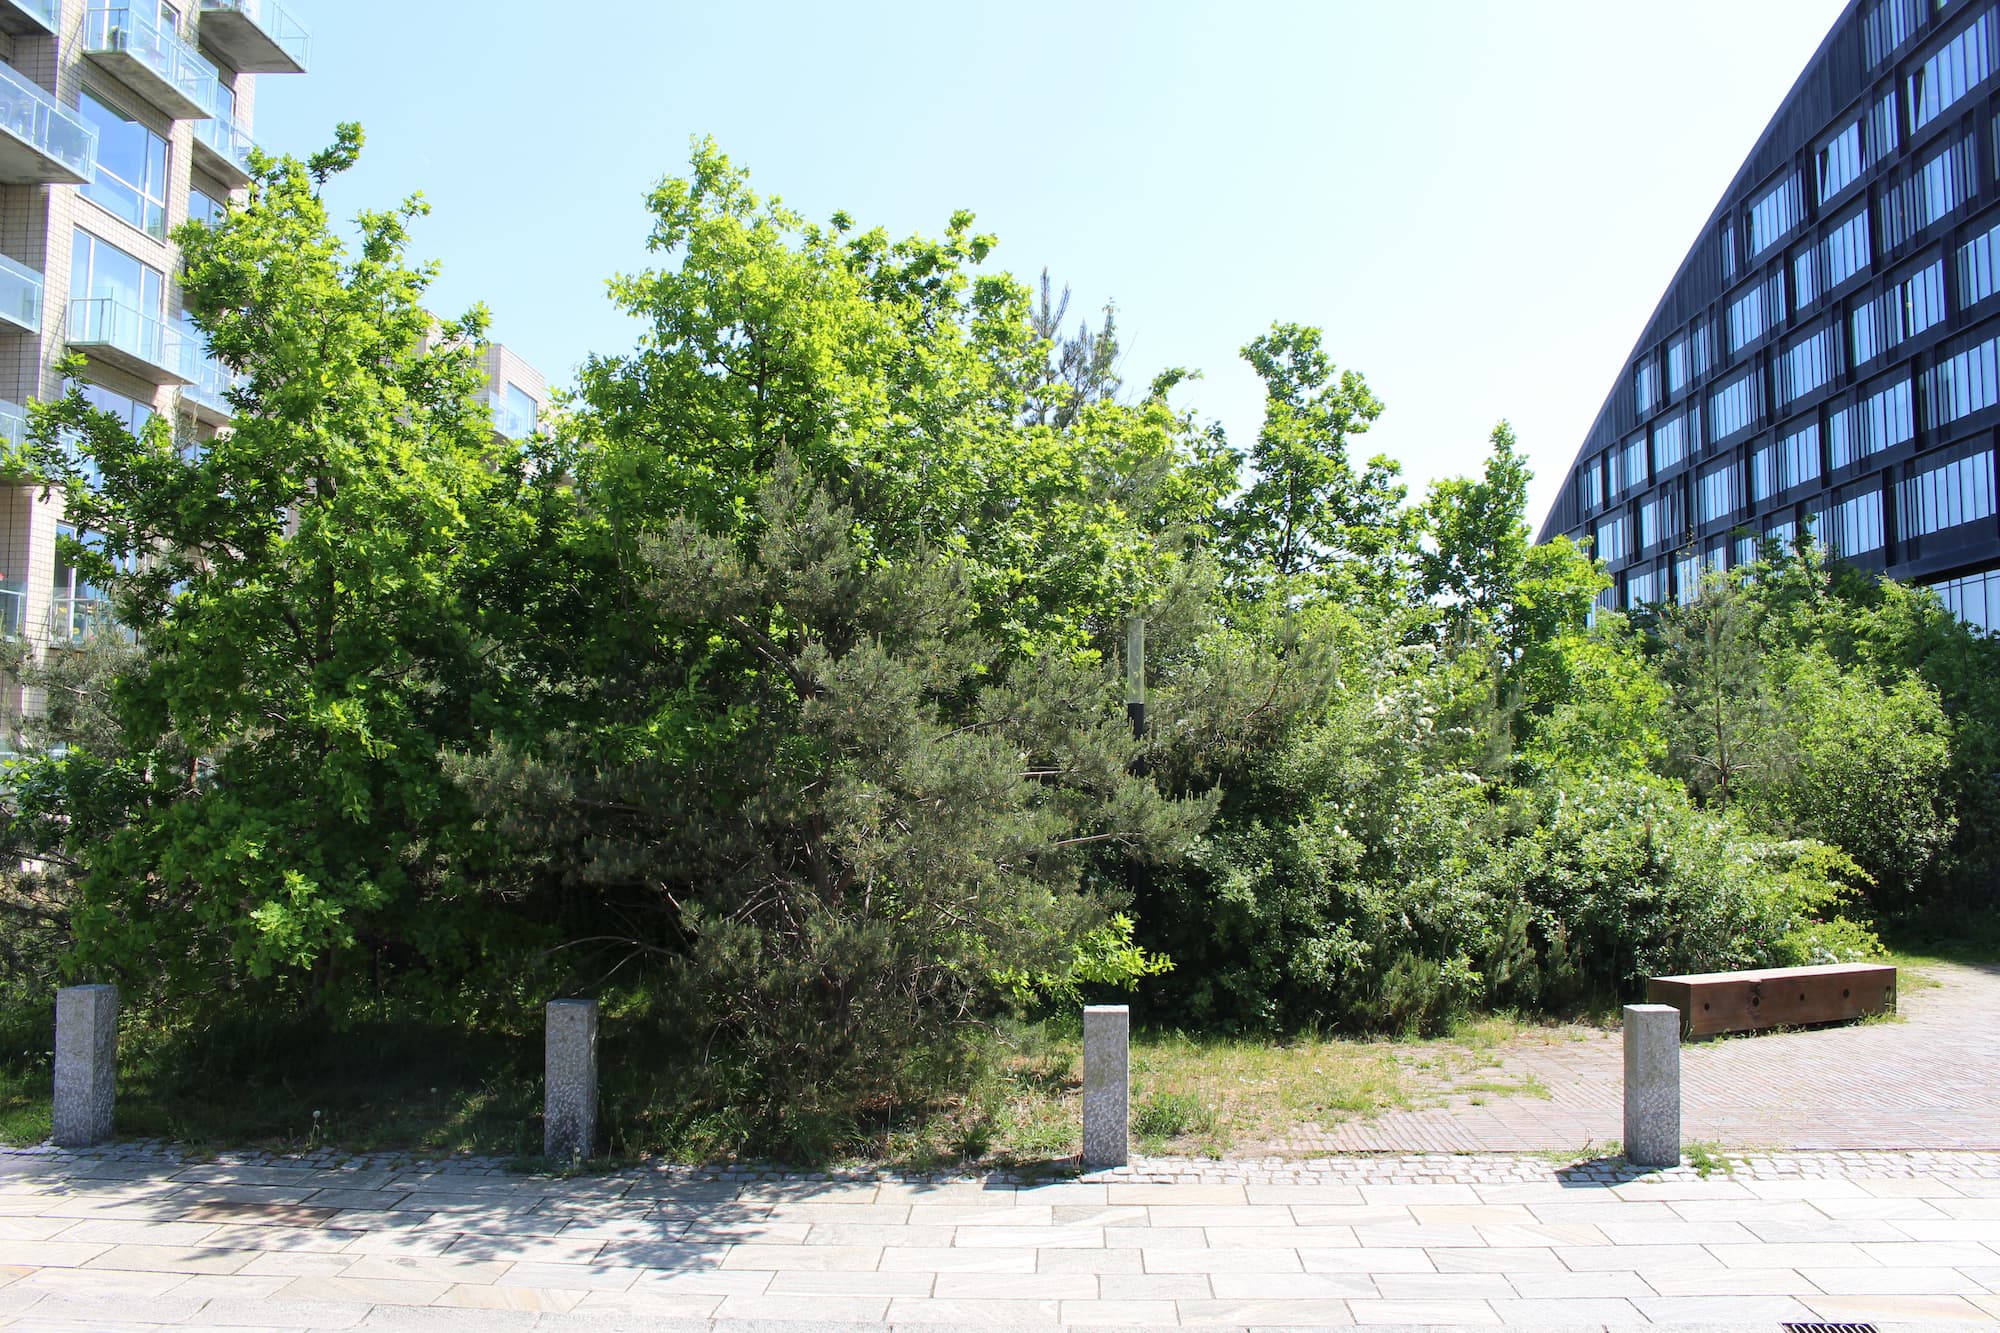 Lommeparken Skovbrynet mellem Porthuset og Winghouse i Ørestad City.